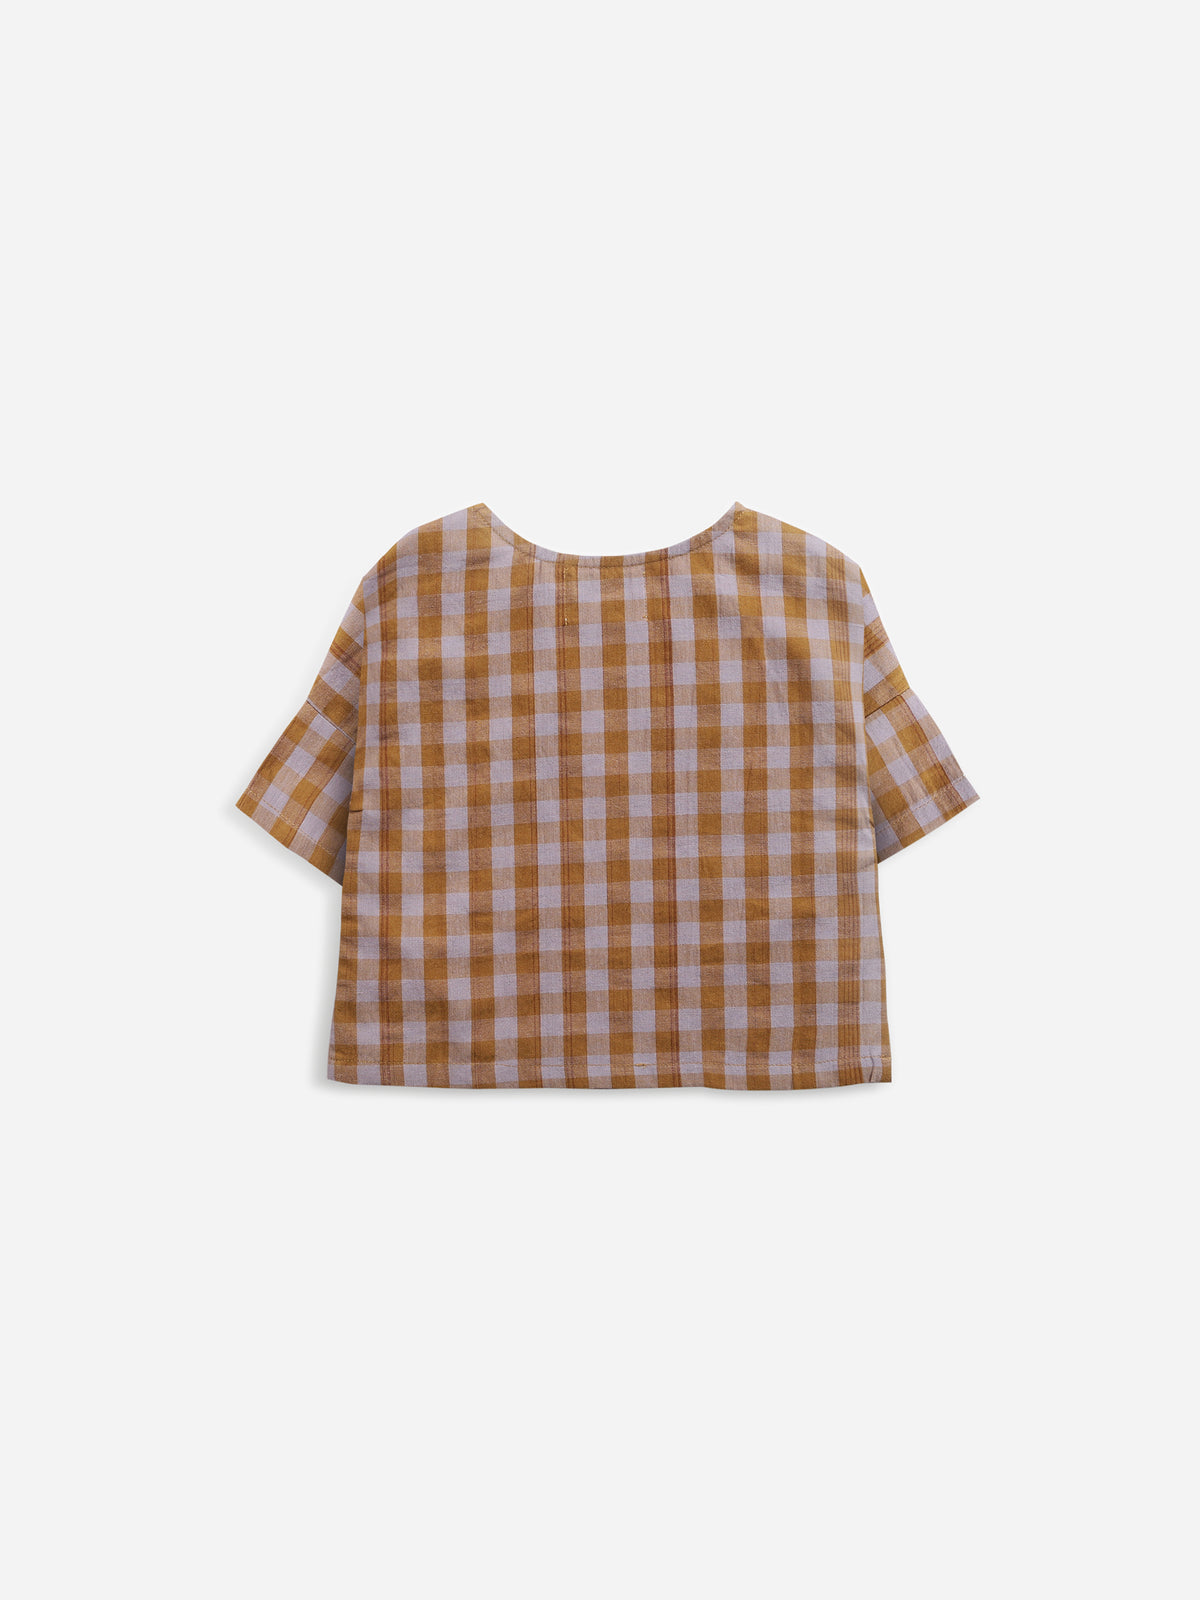 Vichy Woven Toddler Shirt